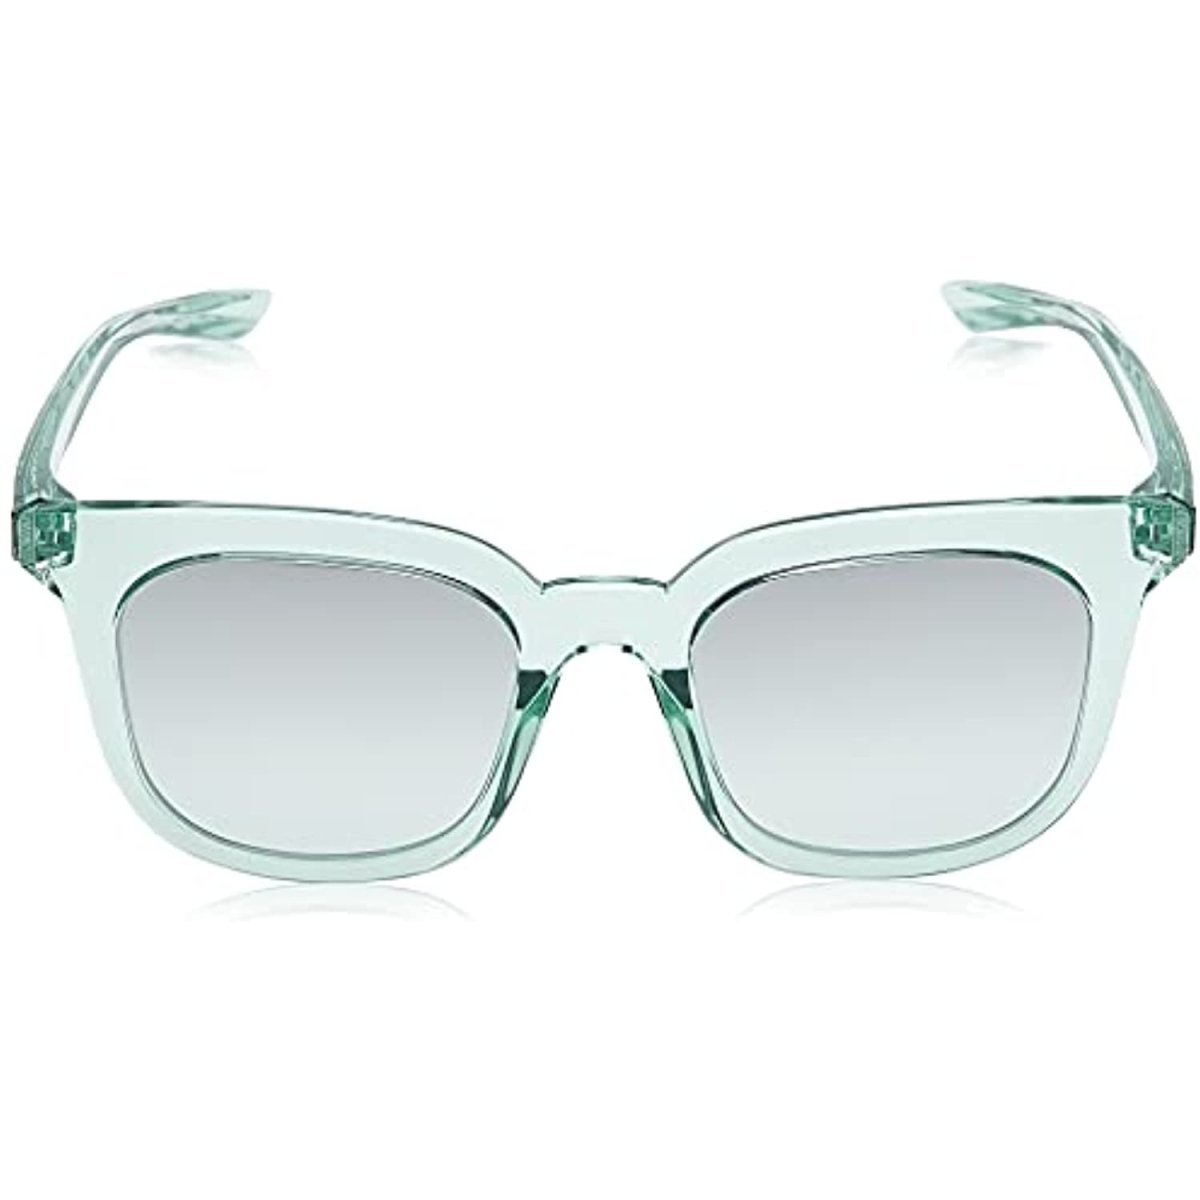 Nike Women Sunglasses EV1154-343 Igloo/Teal Gradient W/Silver Mirrored Square - megafashion11Sunglasses